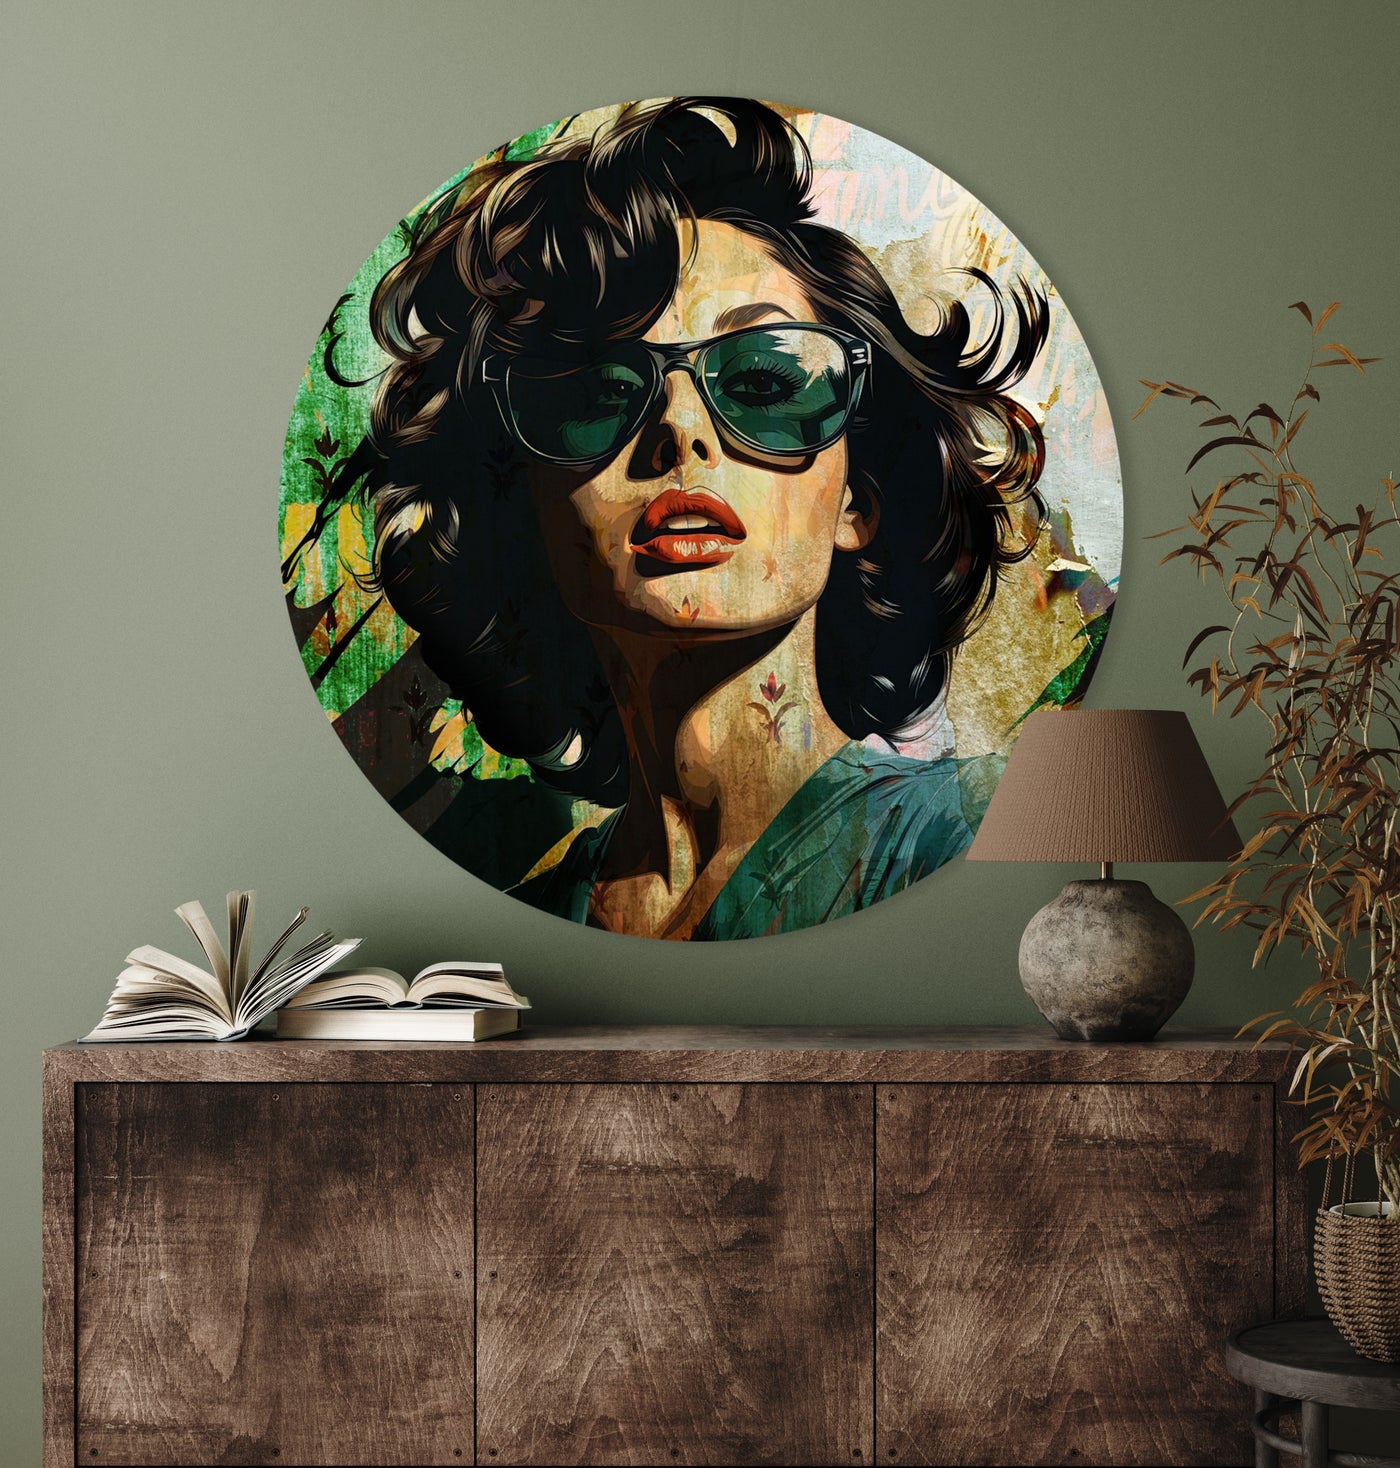 Sophia Loren Vogue - René Ladenius Digital Art